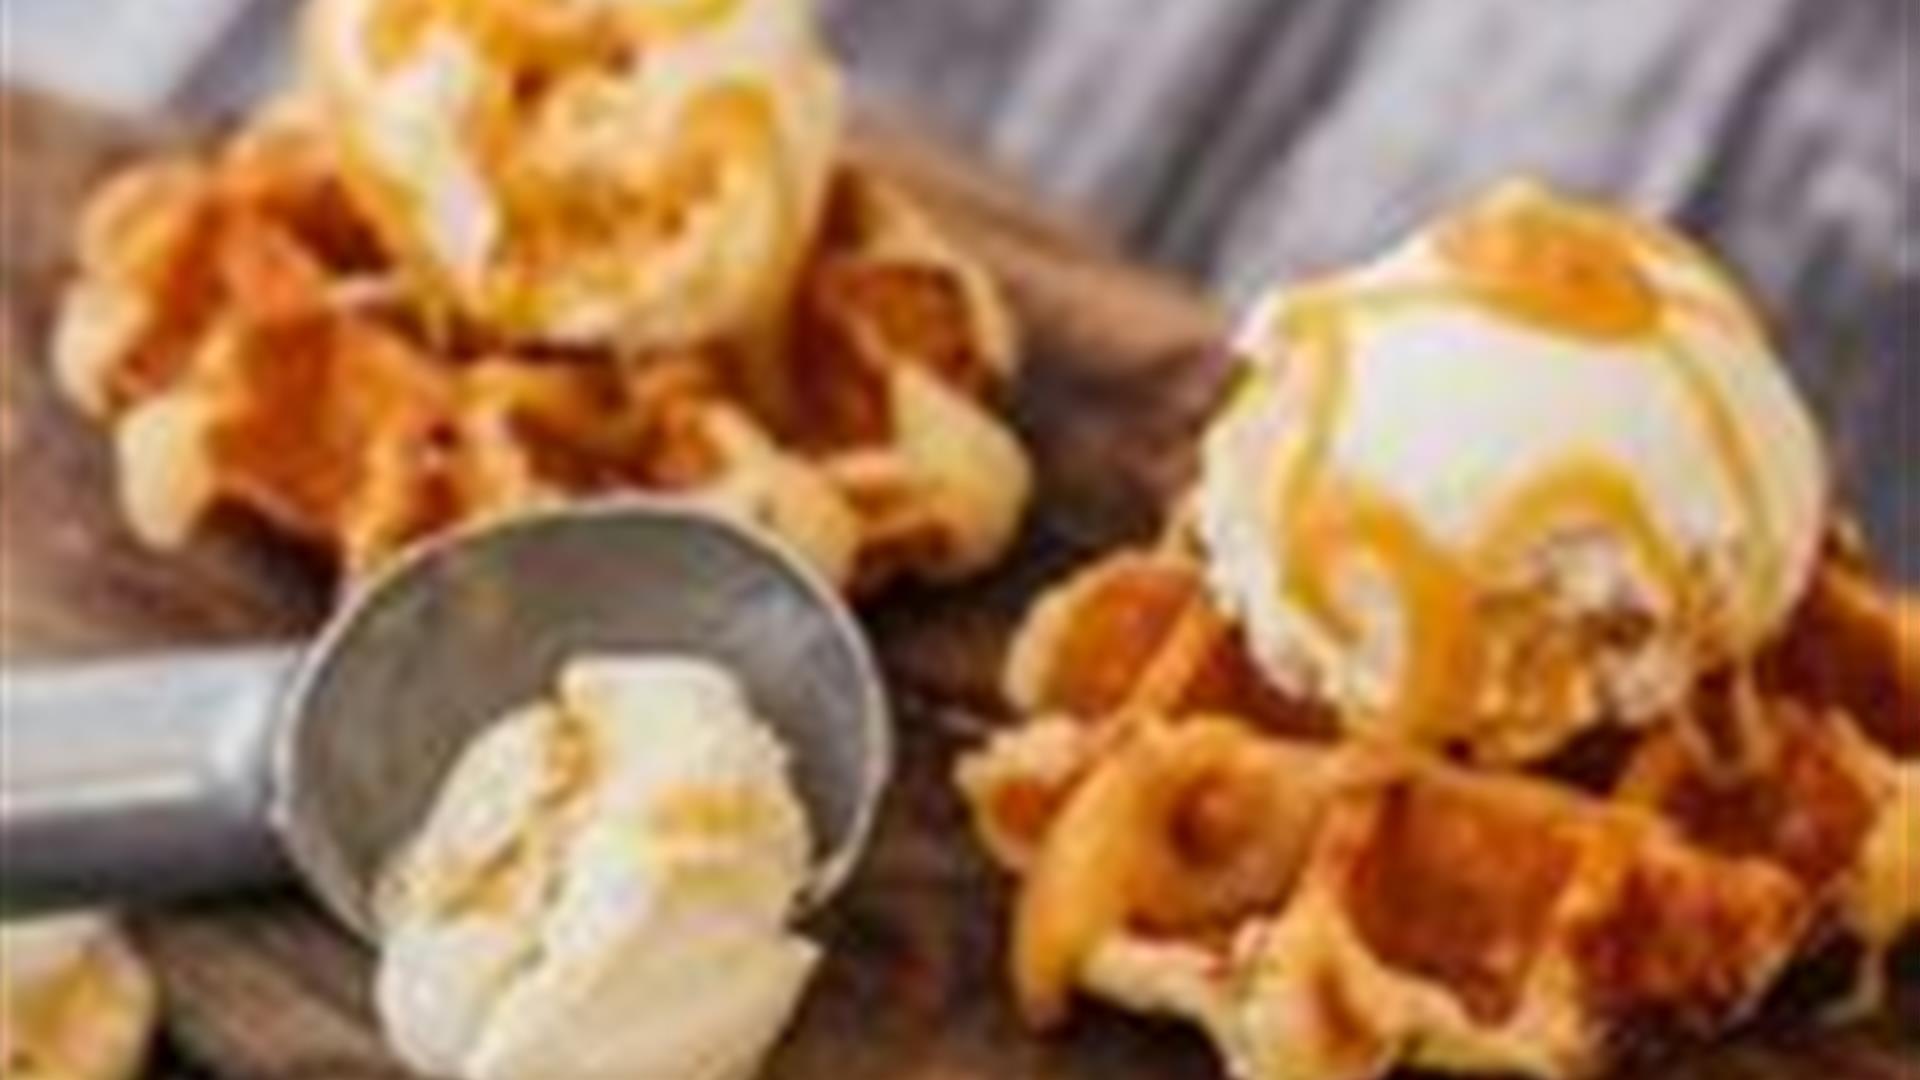 Ice cream scoop on waffles